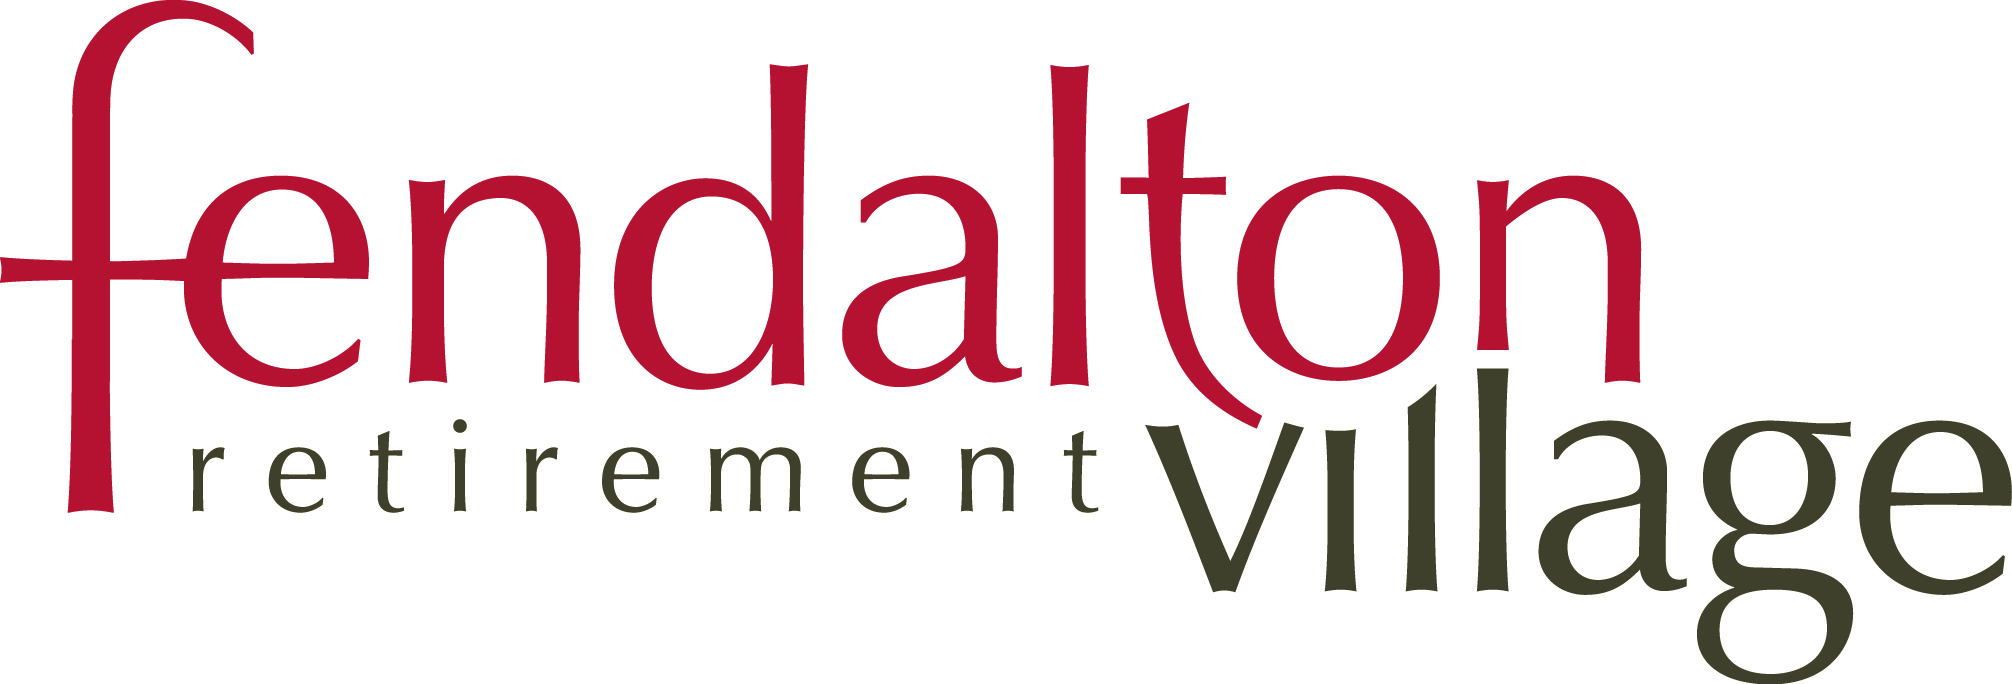 Fendalton Retirement Village logo